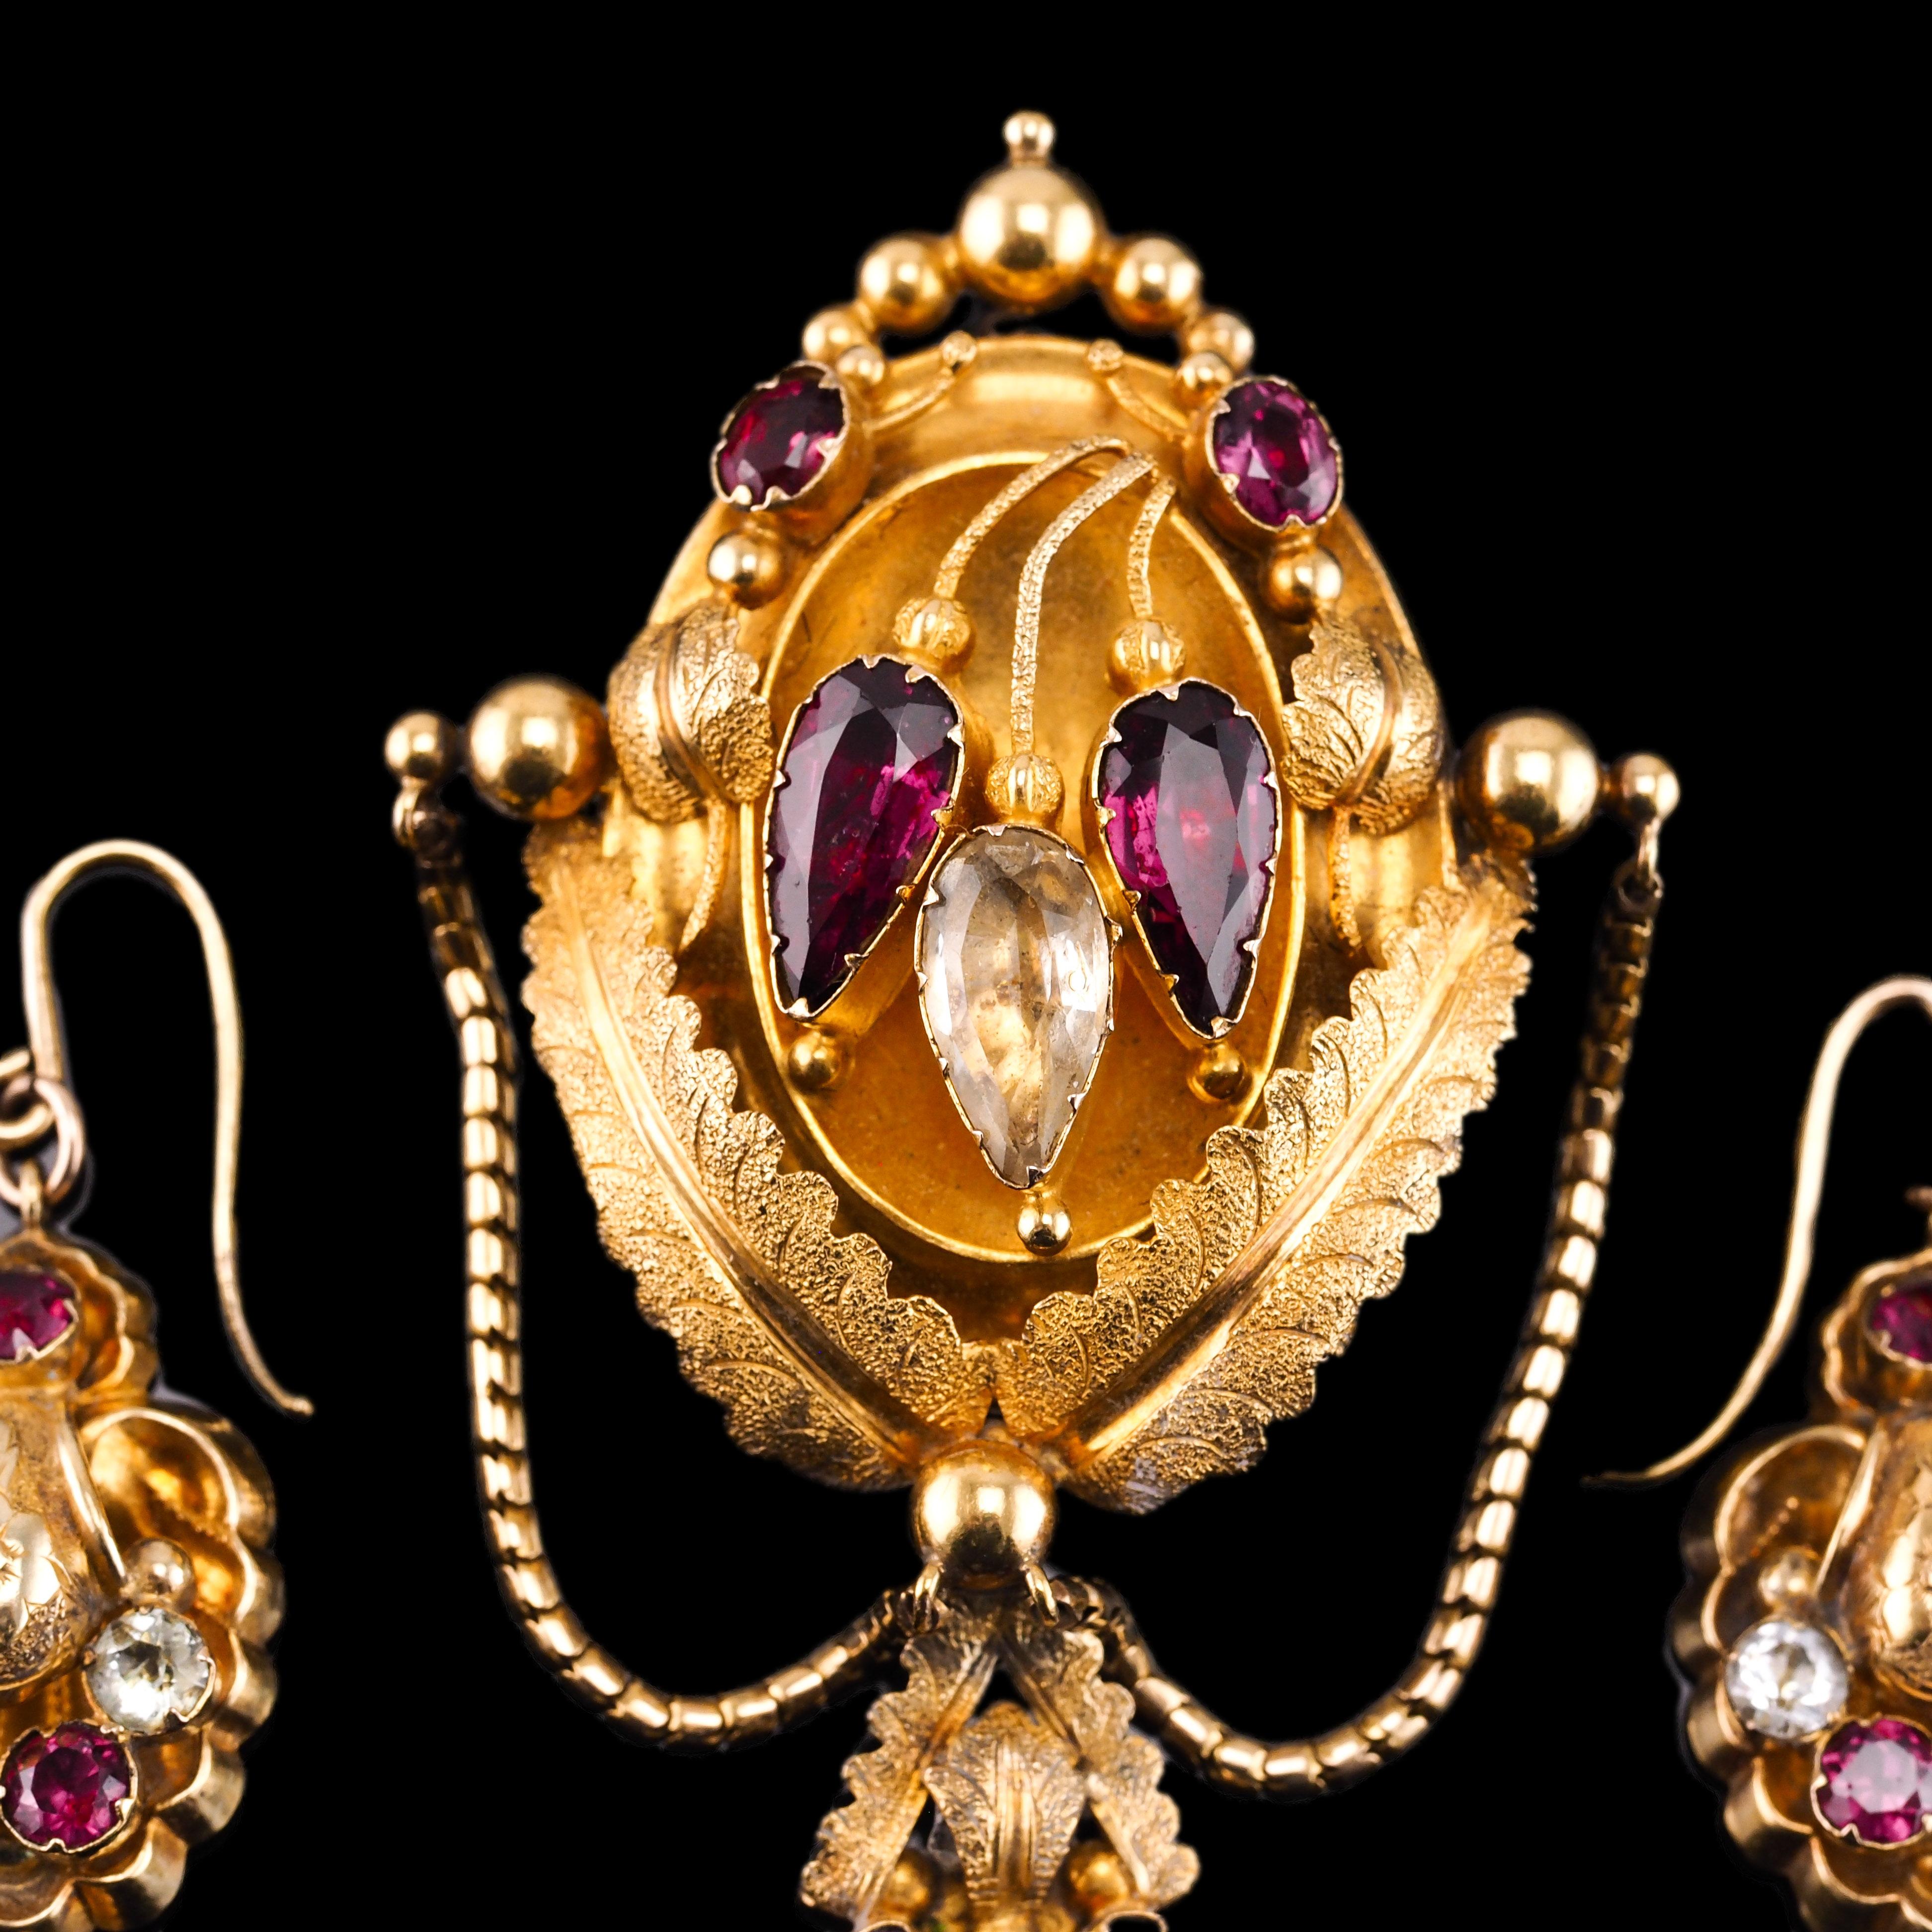 Antique 18K Gold Brooch Pendant & Earrings Garnet & Chrysoberyl - c.1870 6